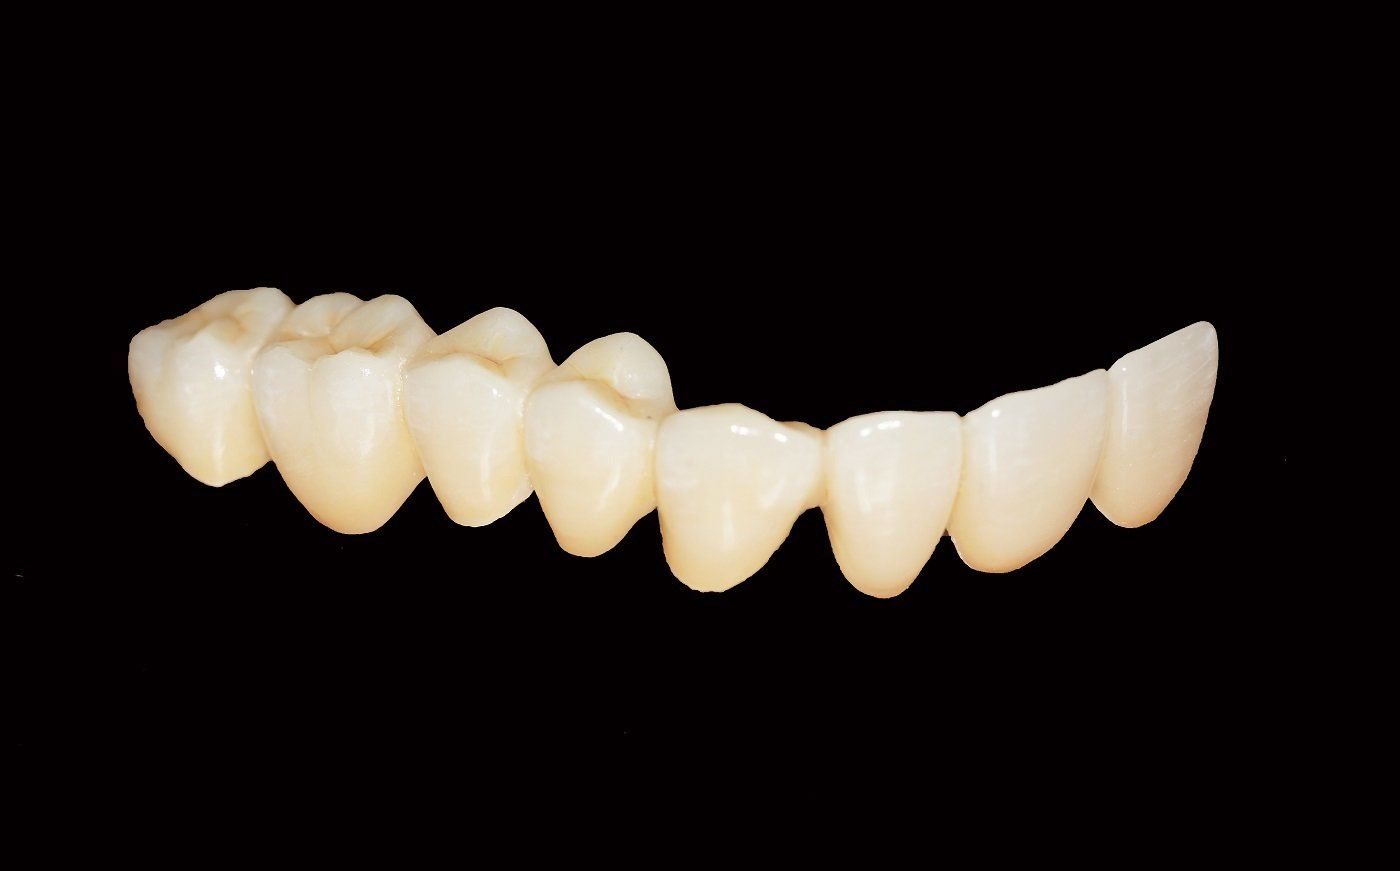 Natural-looking dental crowns